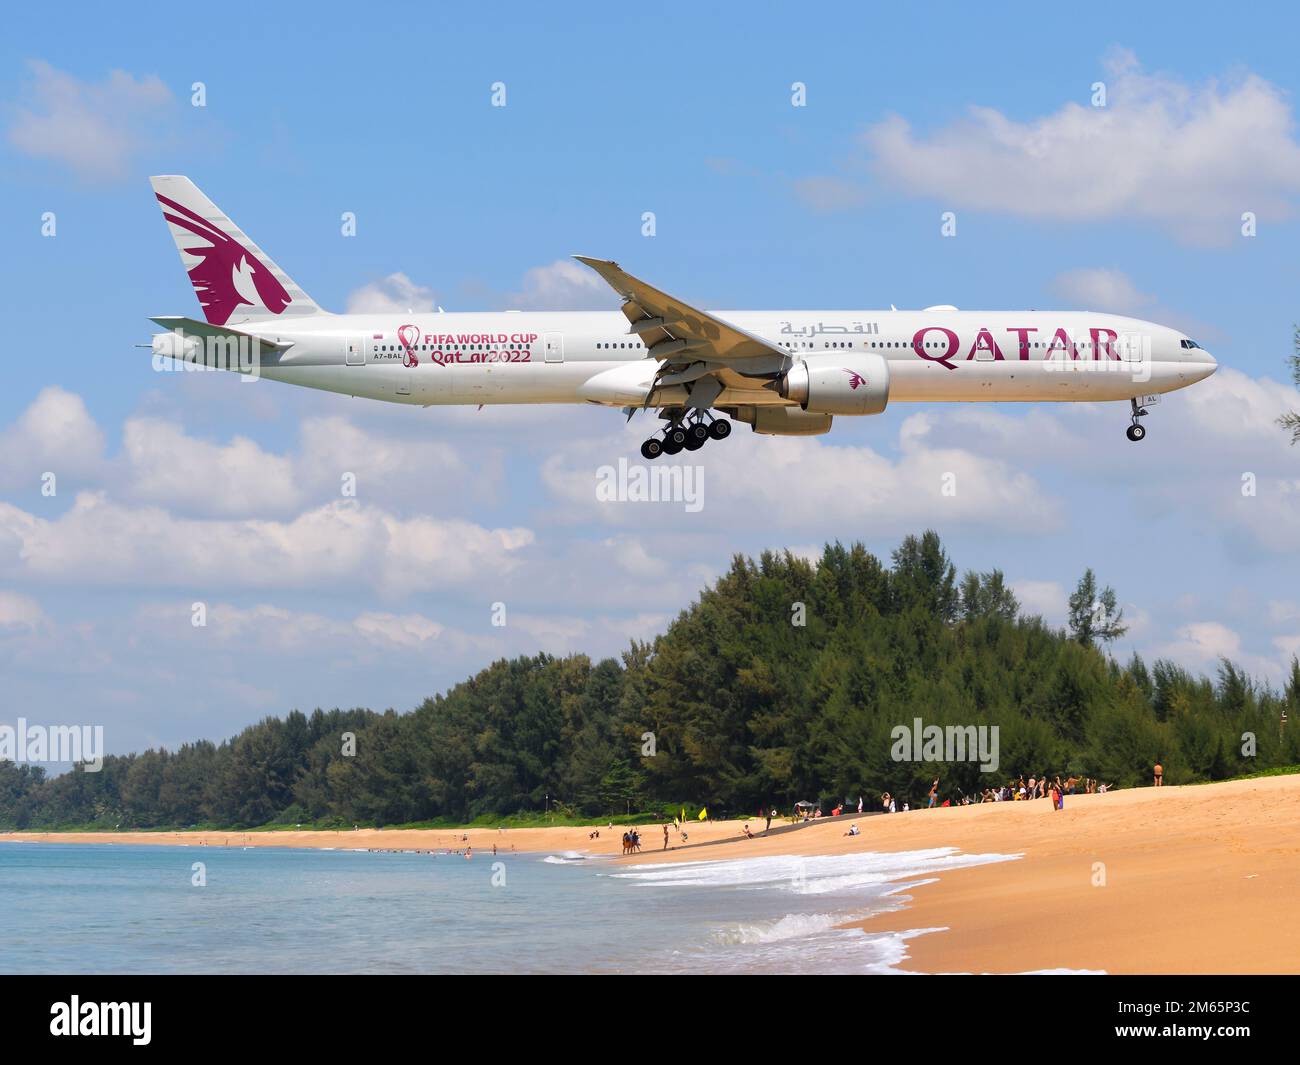 Qatar Airways Boeing 777 airplane over Mai Khao Beach. Aircraft of Qatar Airways 777-300ER with Qatar 2022 sticker. Stock Photo